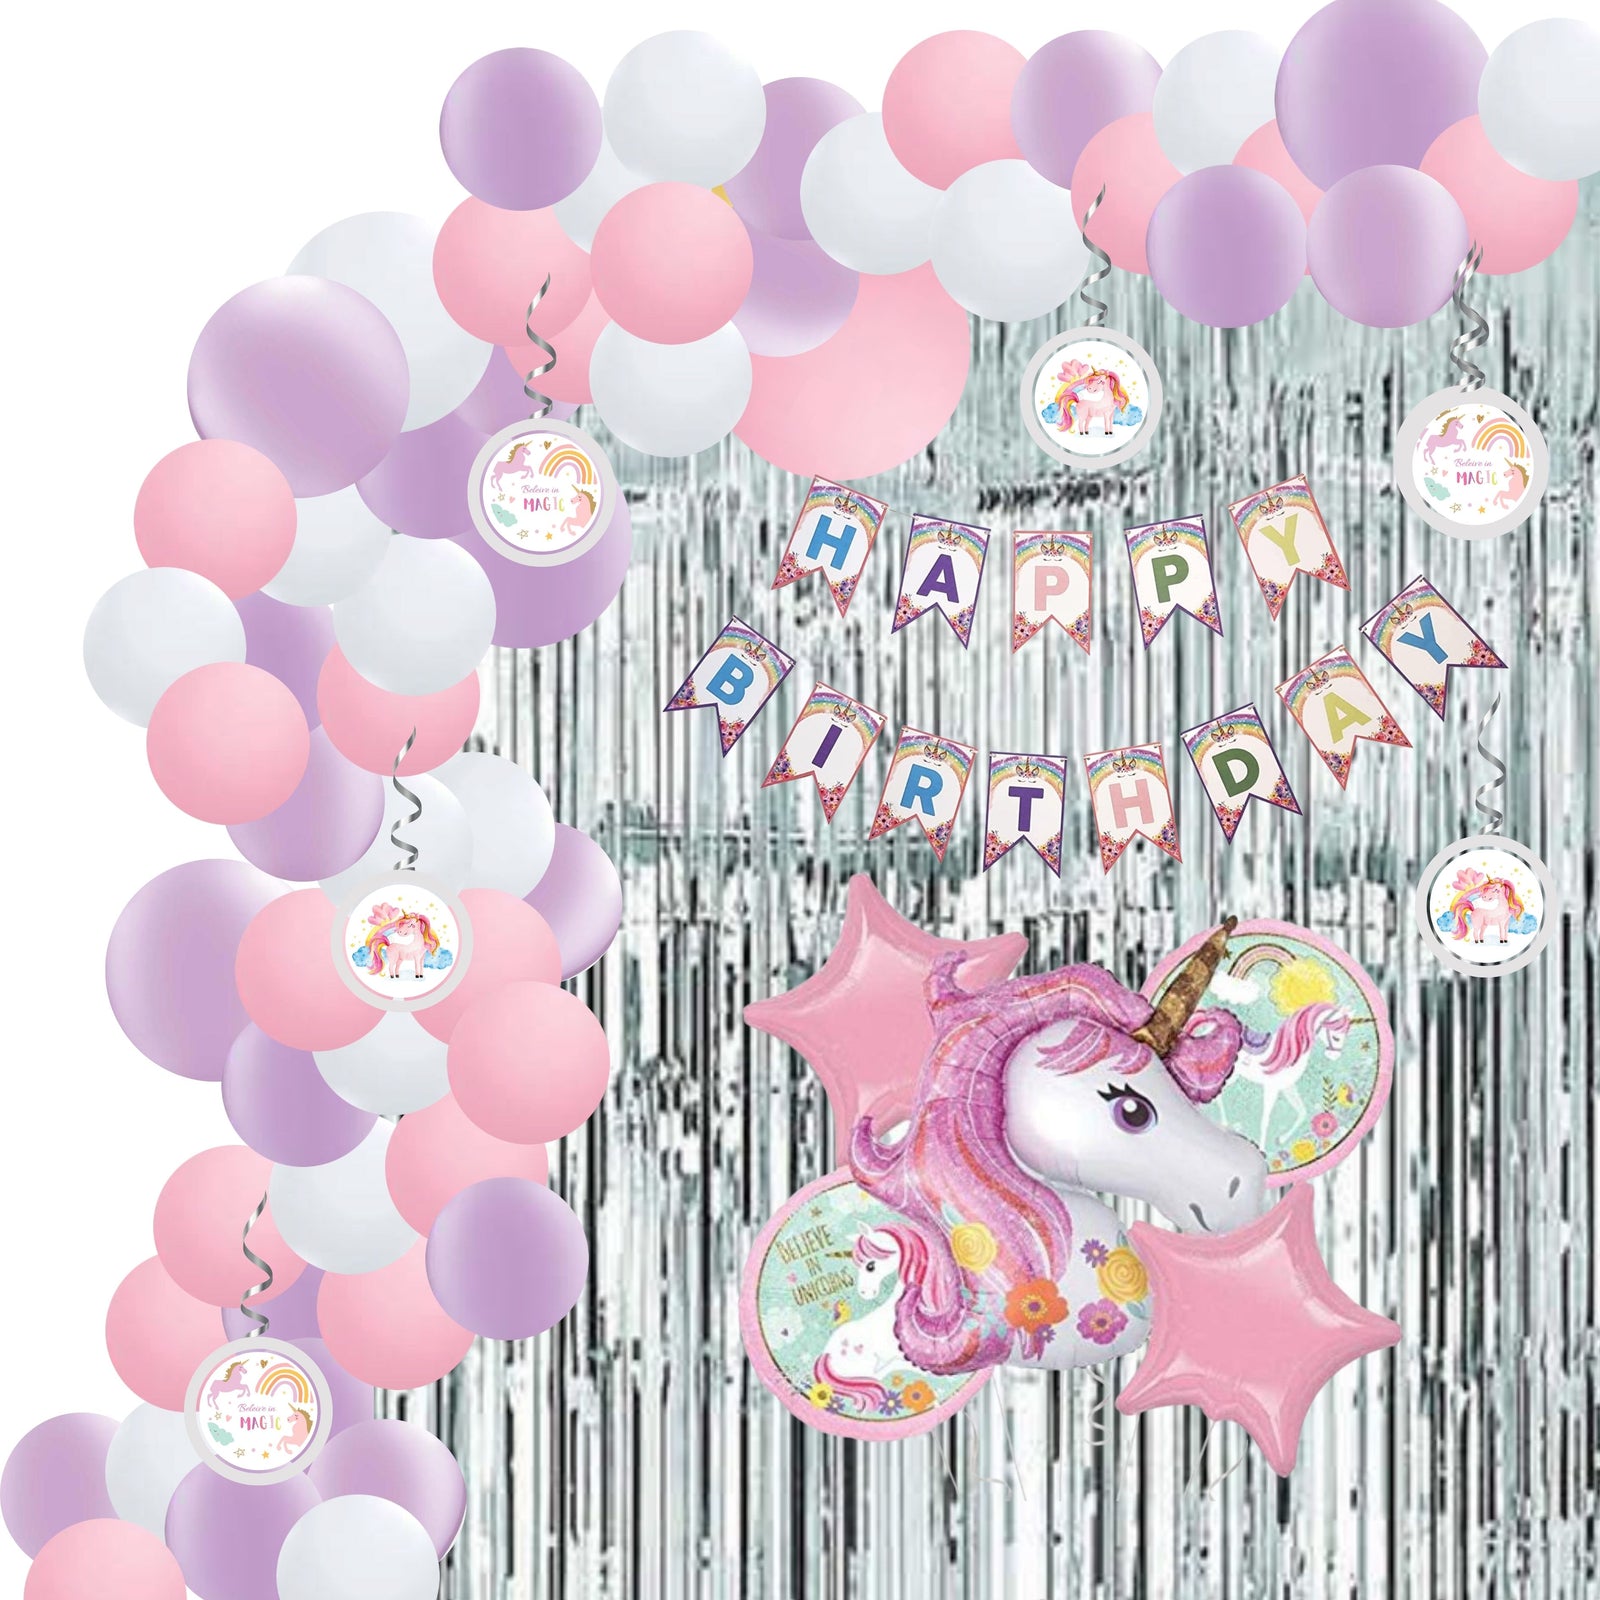 Unicorn Theme Decoration Birthday Kits- 61Pcs